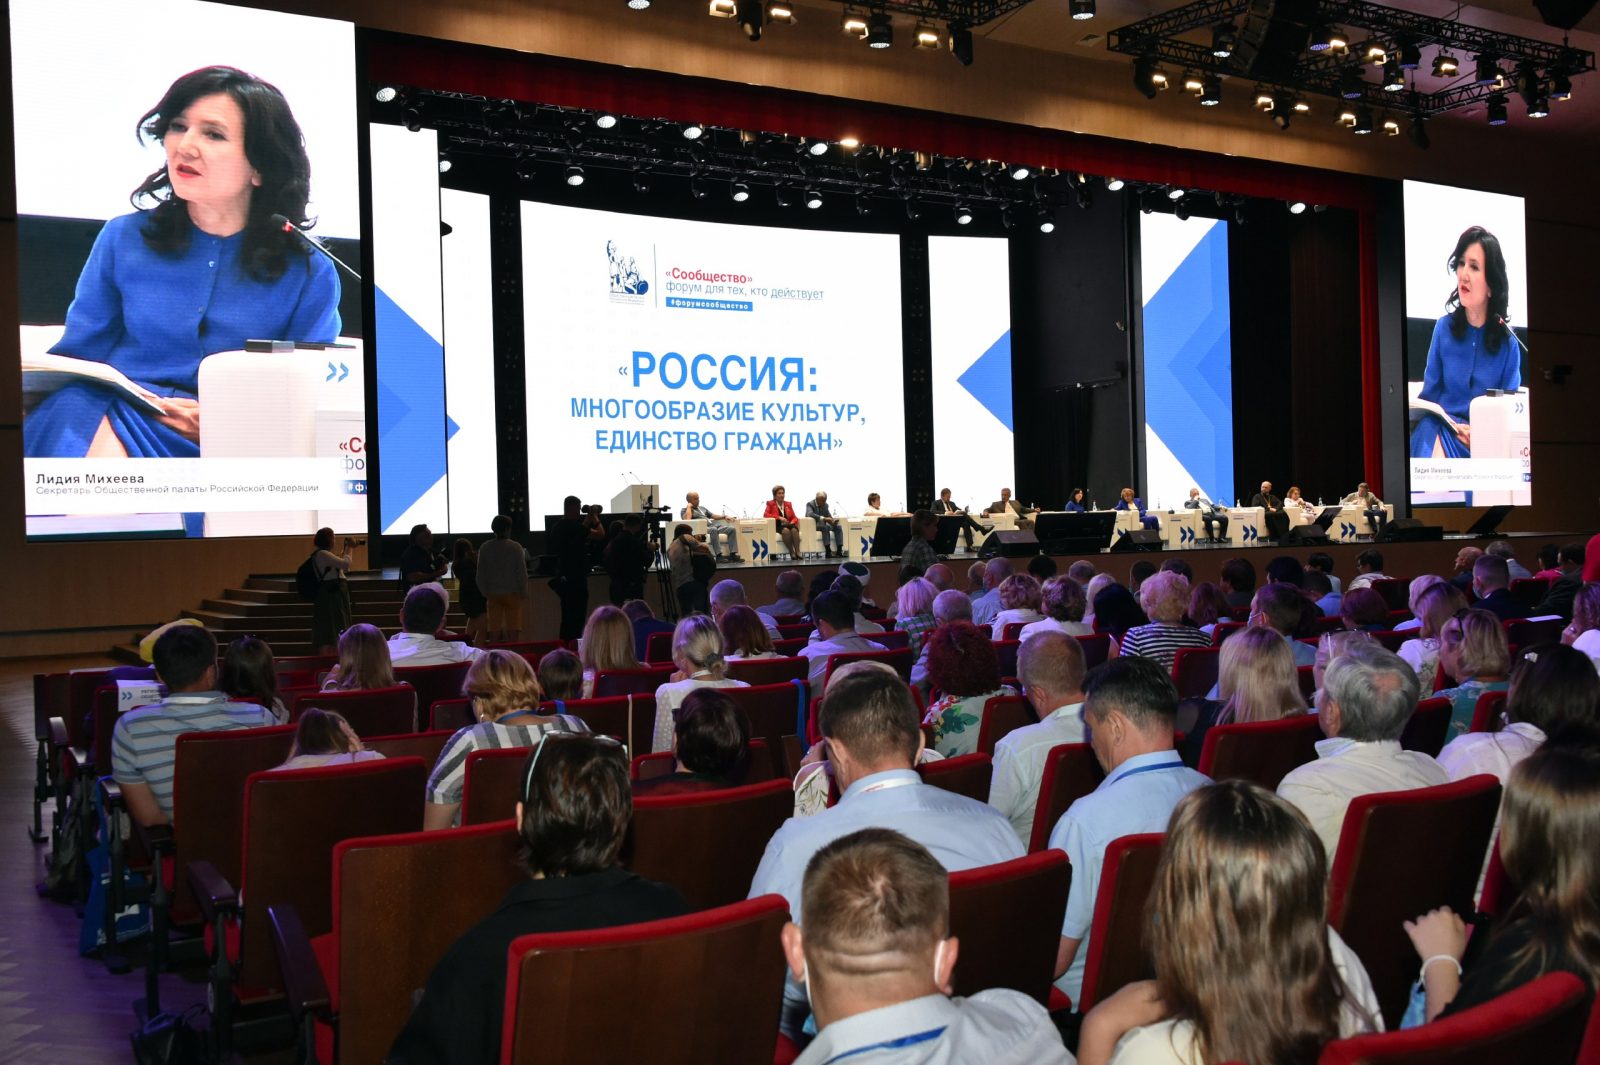 Татарстан Президенты: «Сообщество» форумы – җәмгыять, бизнес һәм хакимият арасында диалог өчен абруйлы мәйданчык